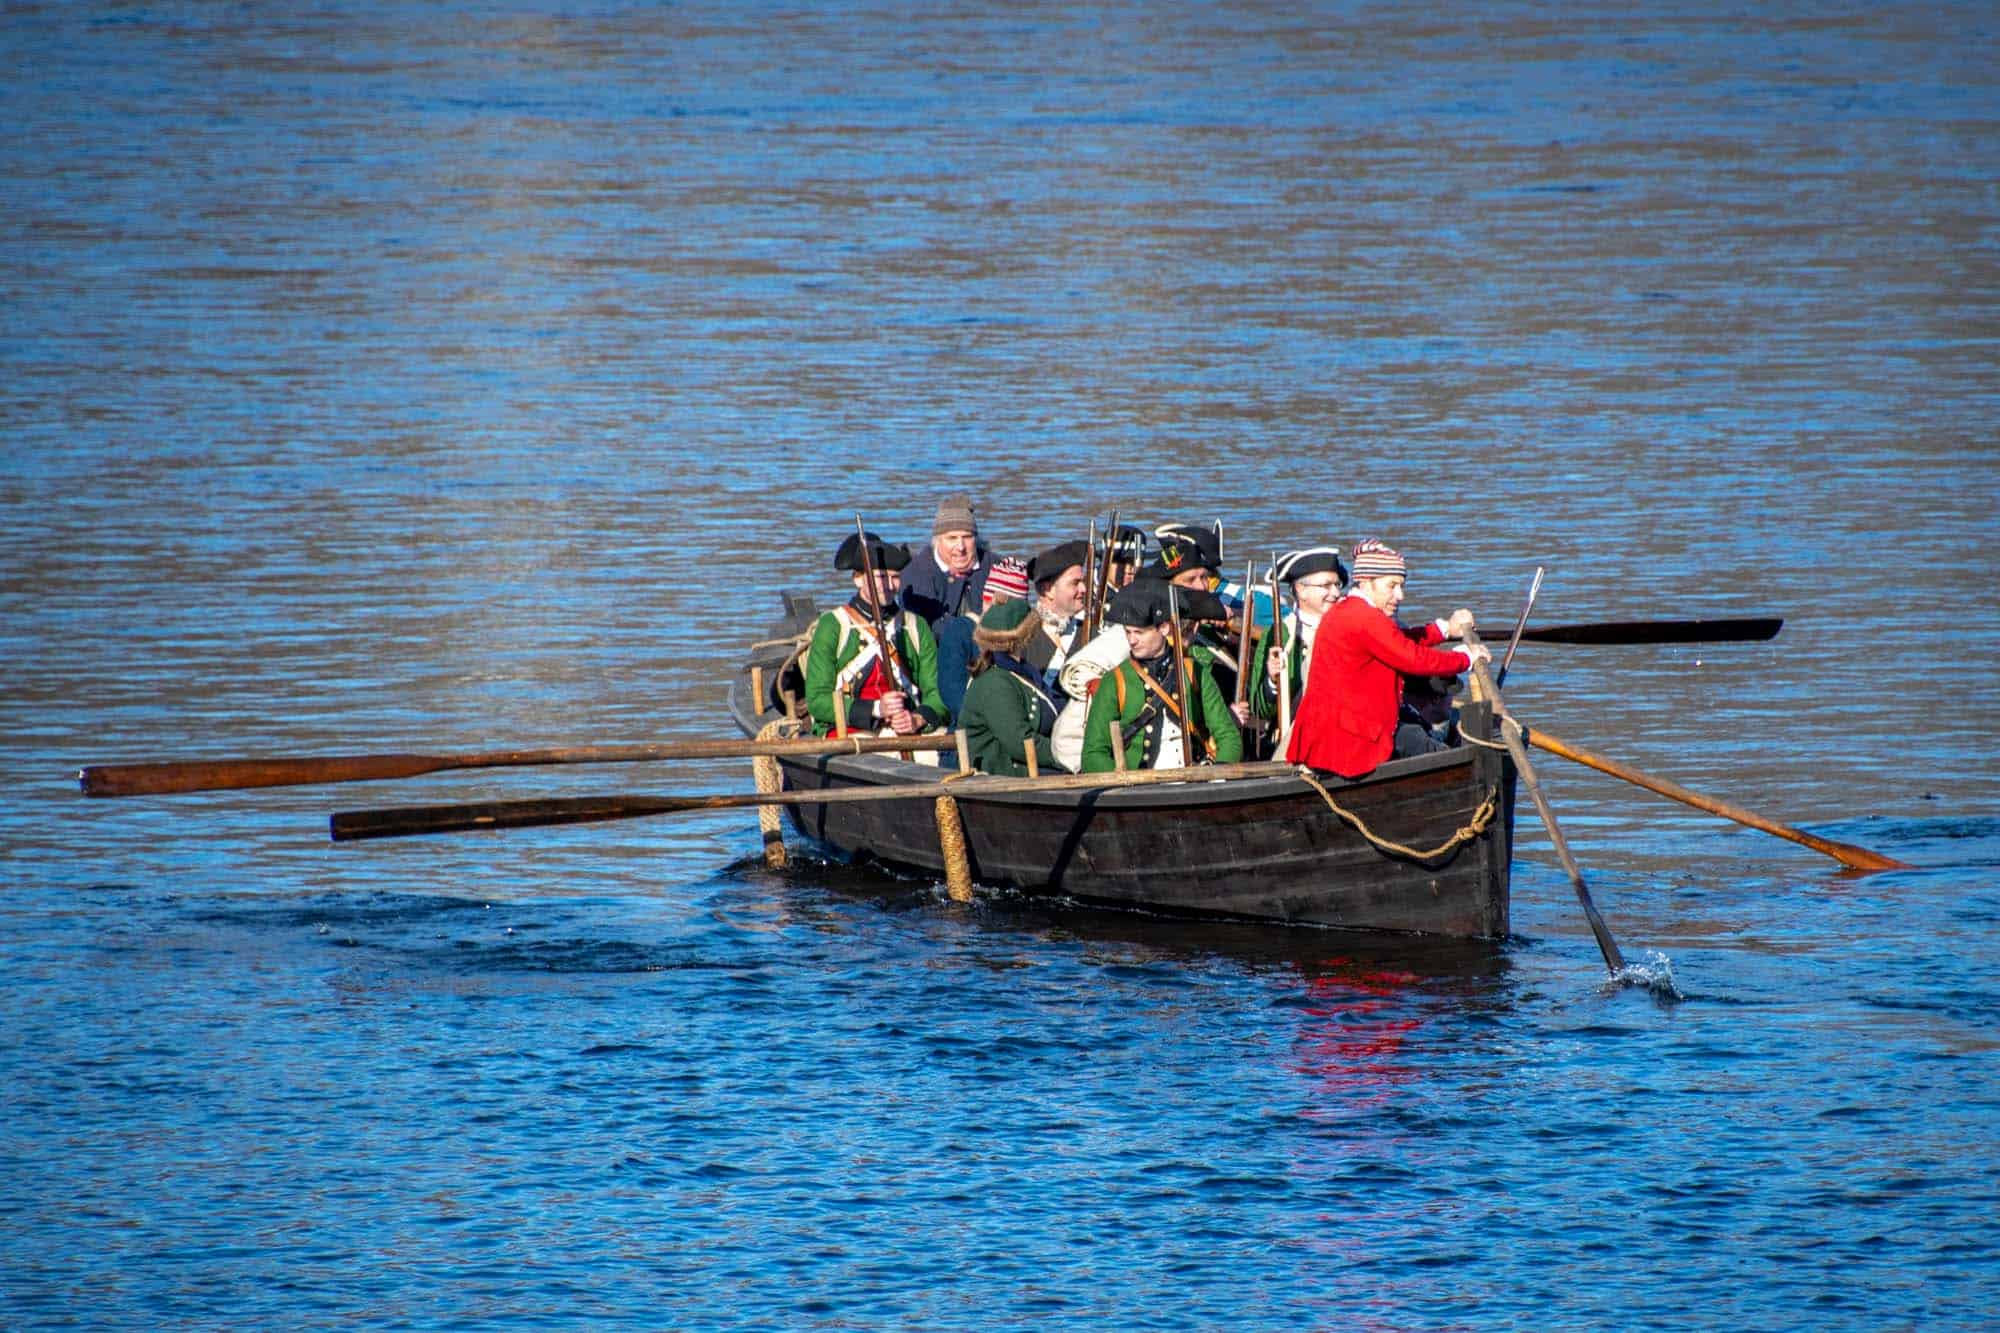 Revolutionary War reenactors in a wooden boat rowing across the Delaware River